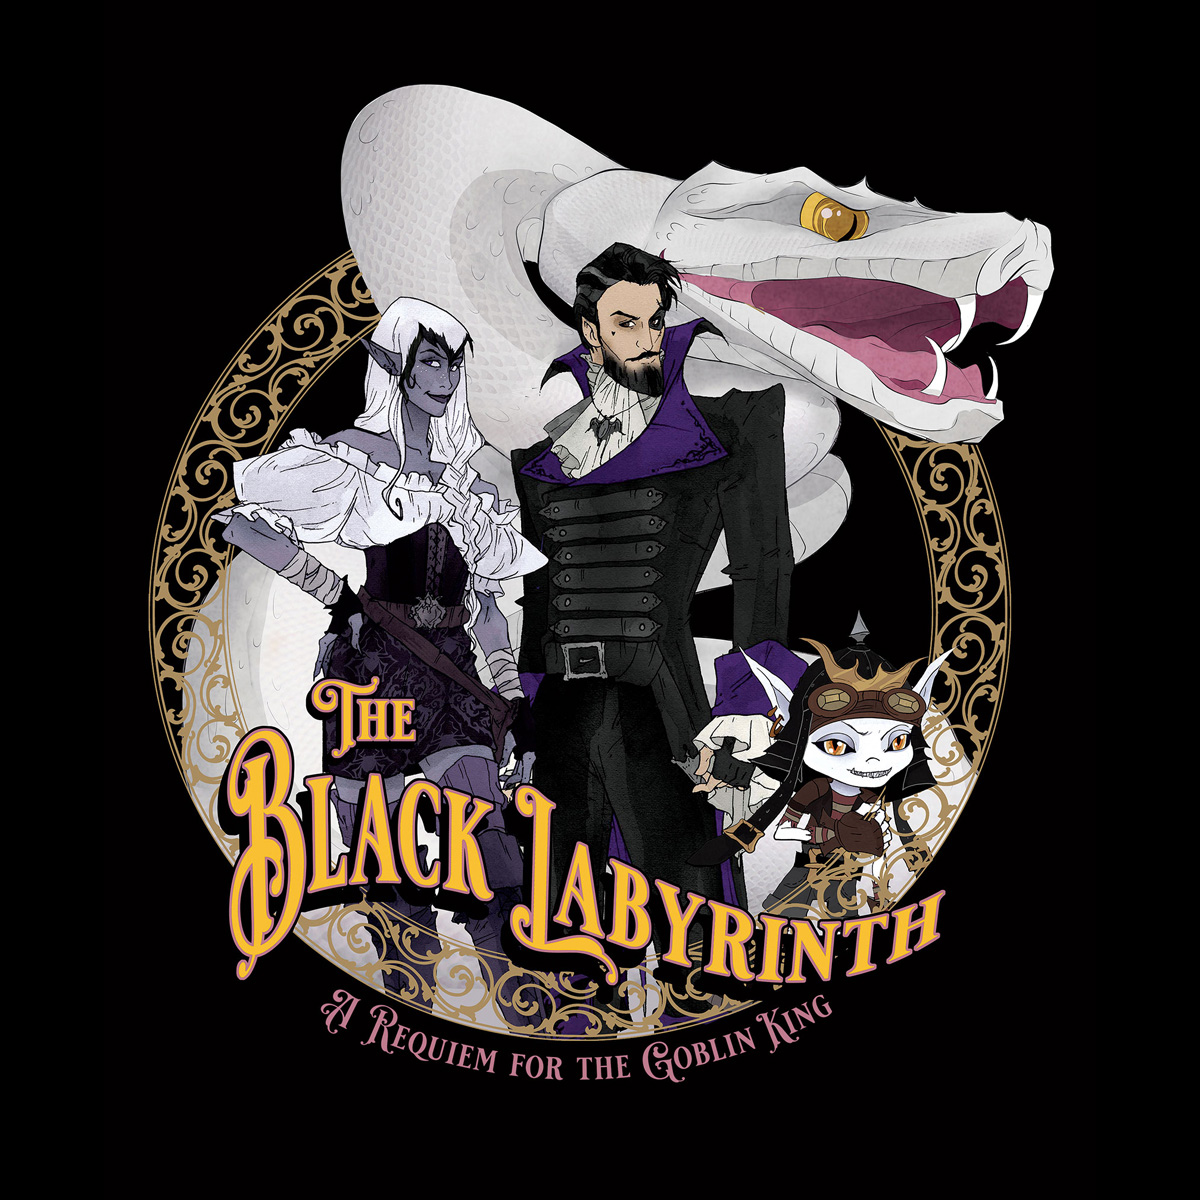 11"x17" Black Labyrinth Poster on Cardstock